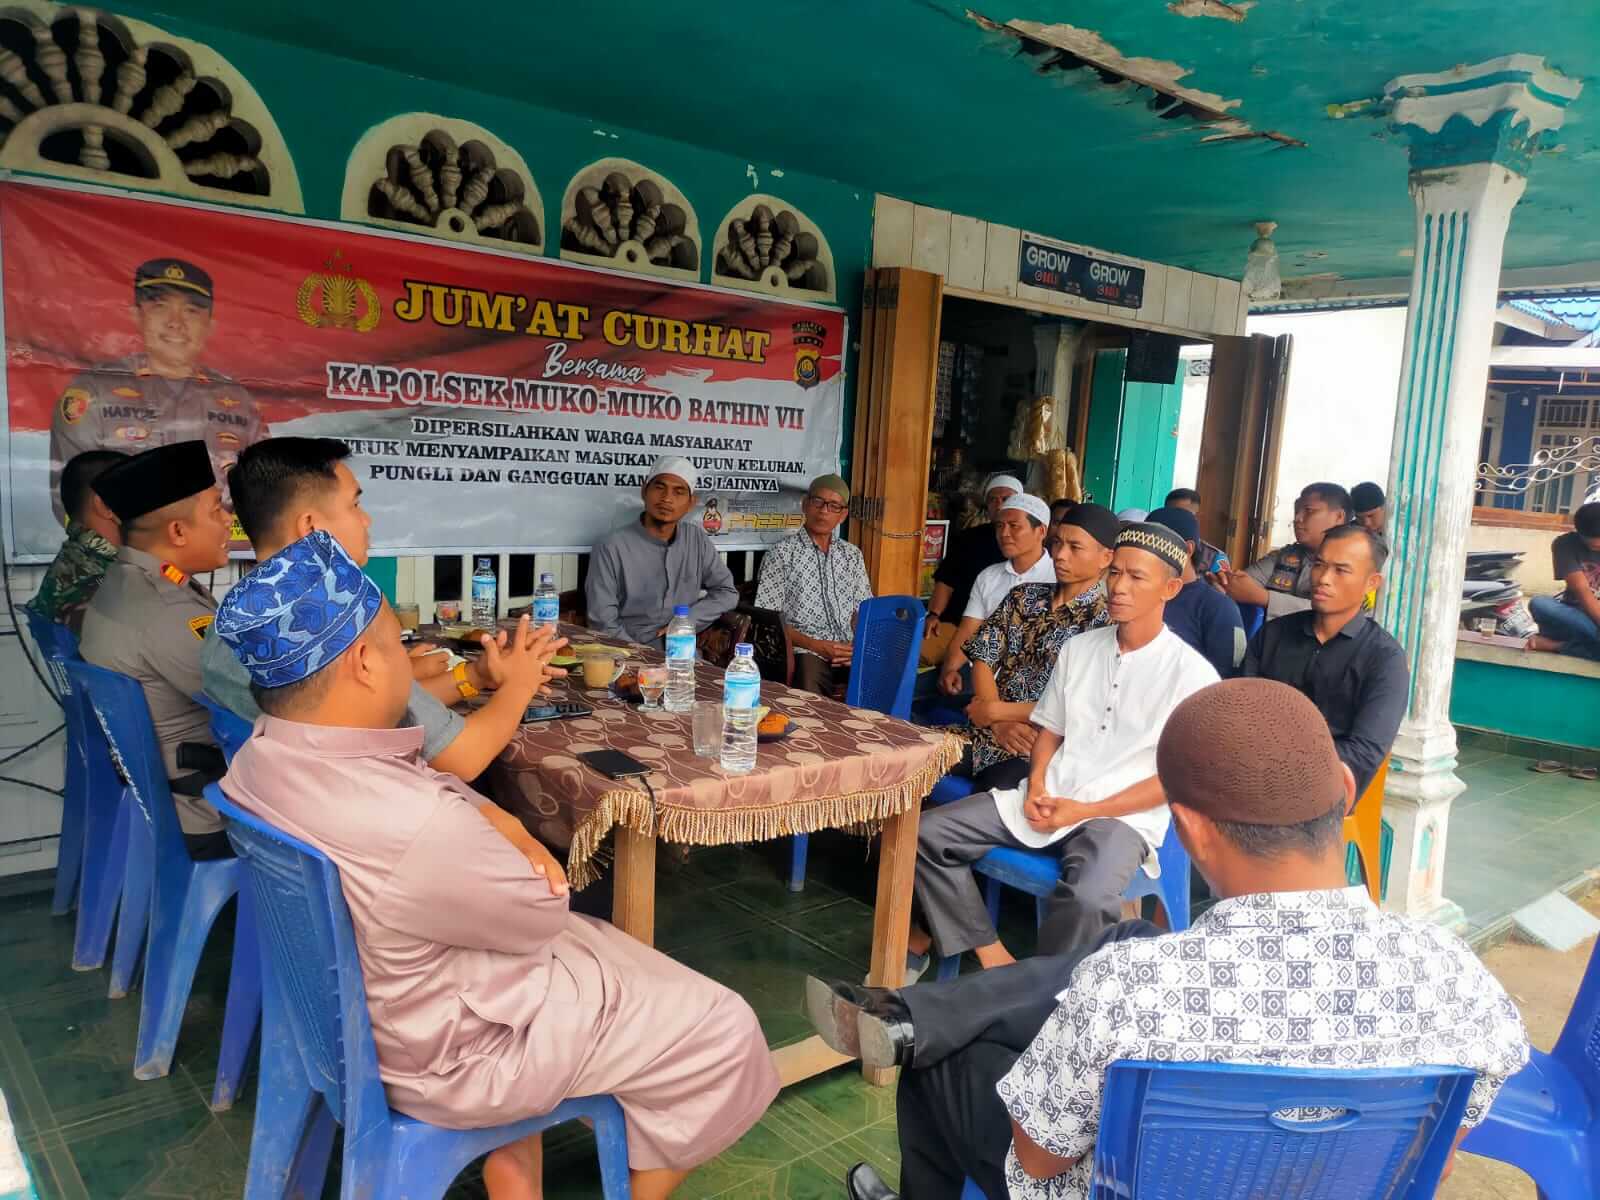 Jumat curhat, Kapolsek Muko Muko Bathin VII Dengarkan Keluhan Warga Dusun Pusat Jalo